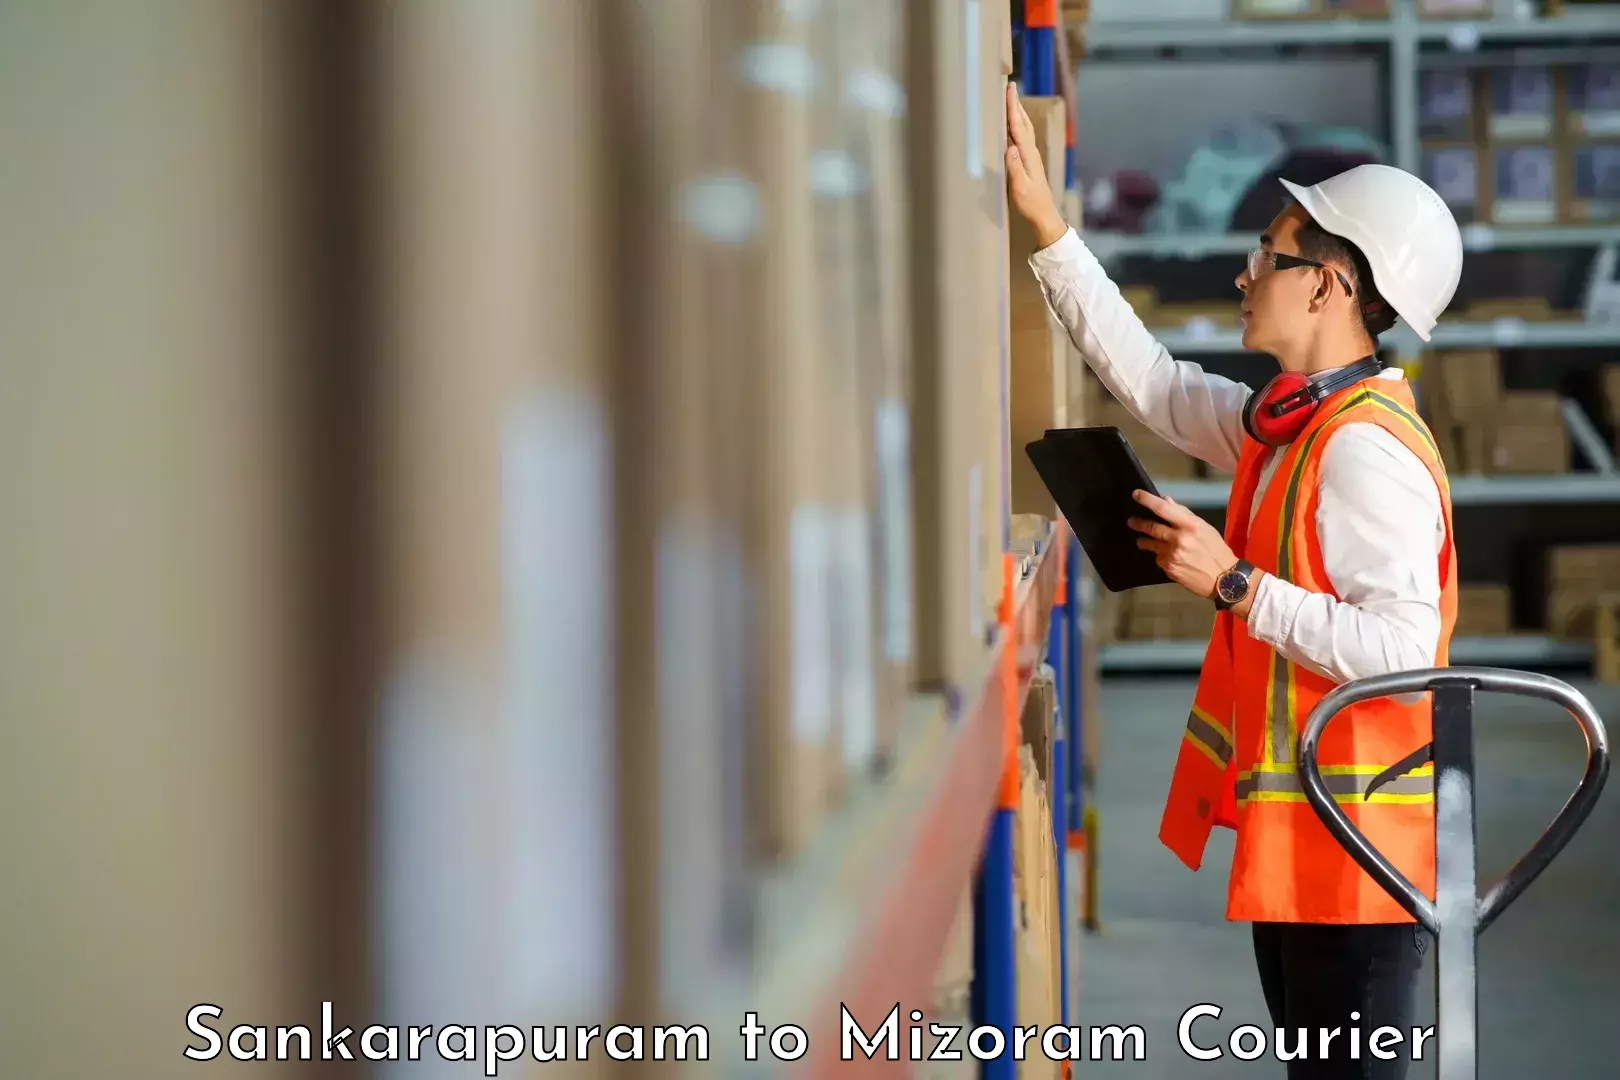 State-of-the-art courier technology Sankarapuram to Mizoram